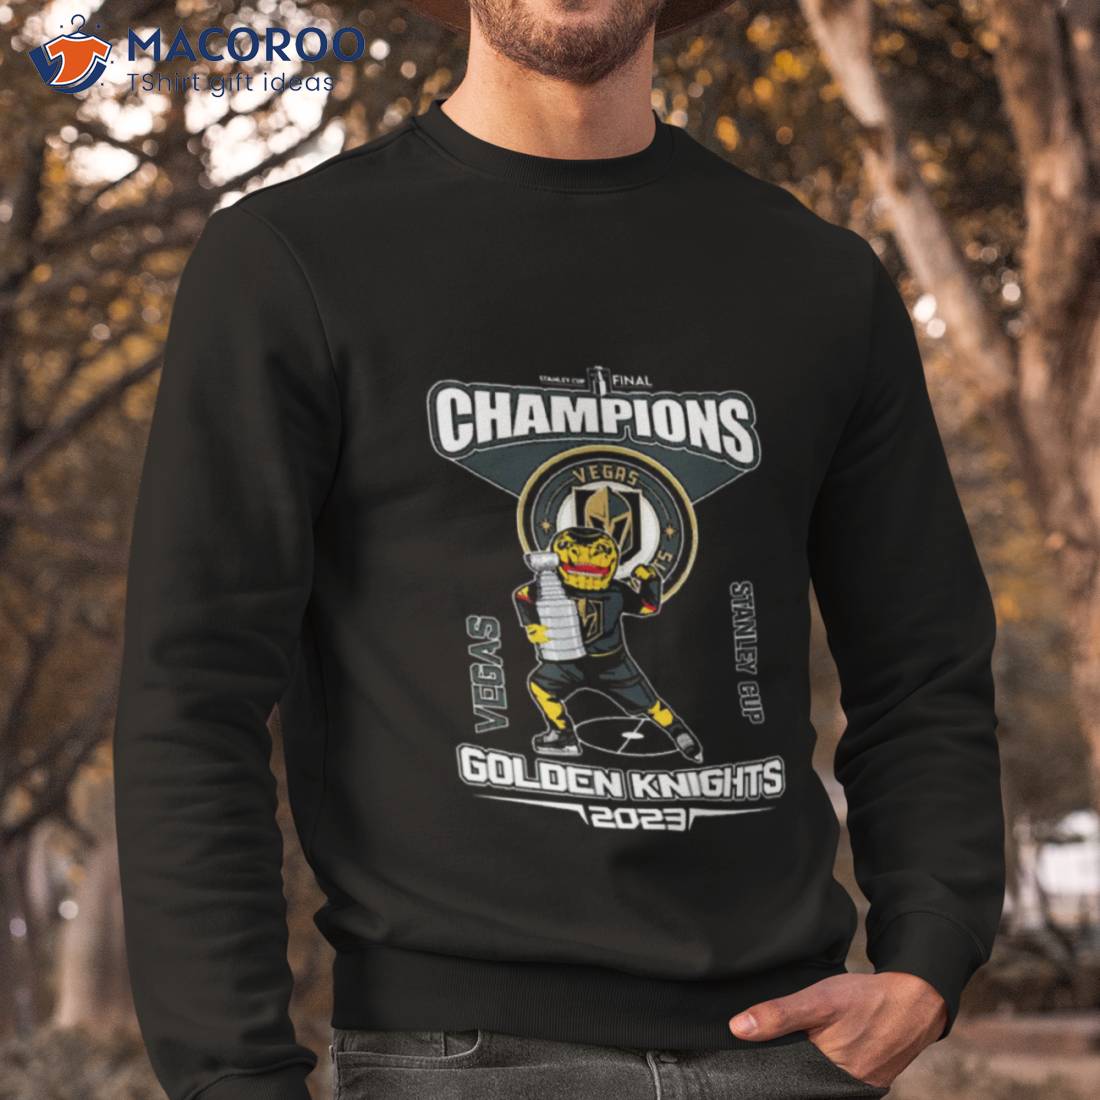 https://images.macoroo.com/wp-content/uploads/2023/06/stanley-cup-final-champions-vegas-vegas-stanley-cup-golden-knights-2023-t-shirt-sweatshirt.jpg